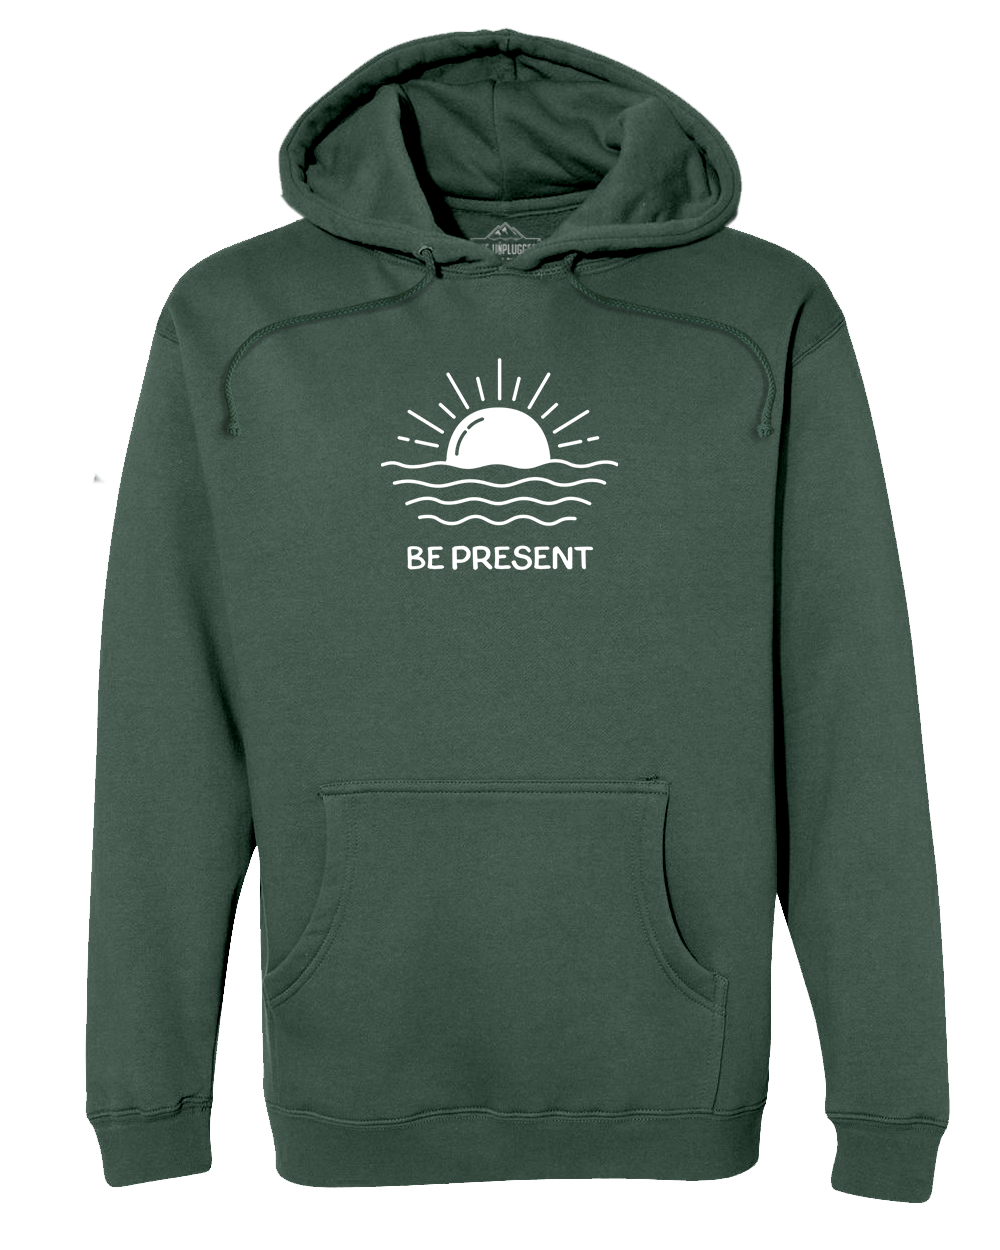 OCEAN SUNSET Premium Heavyweight Hooded Sweatshirt